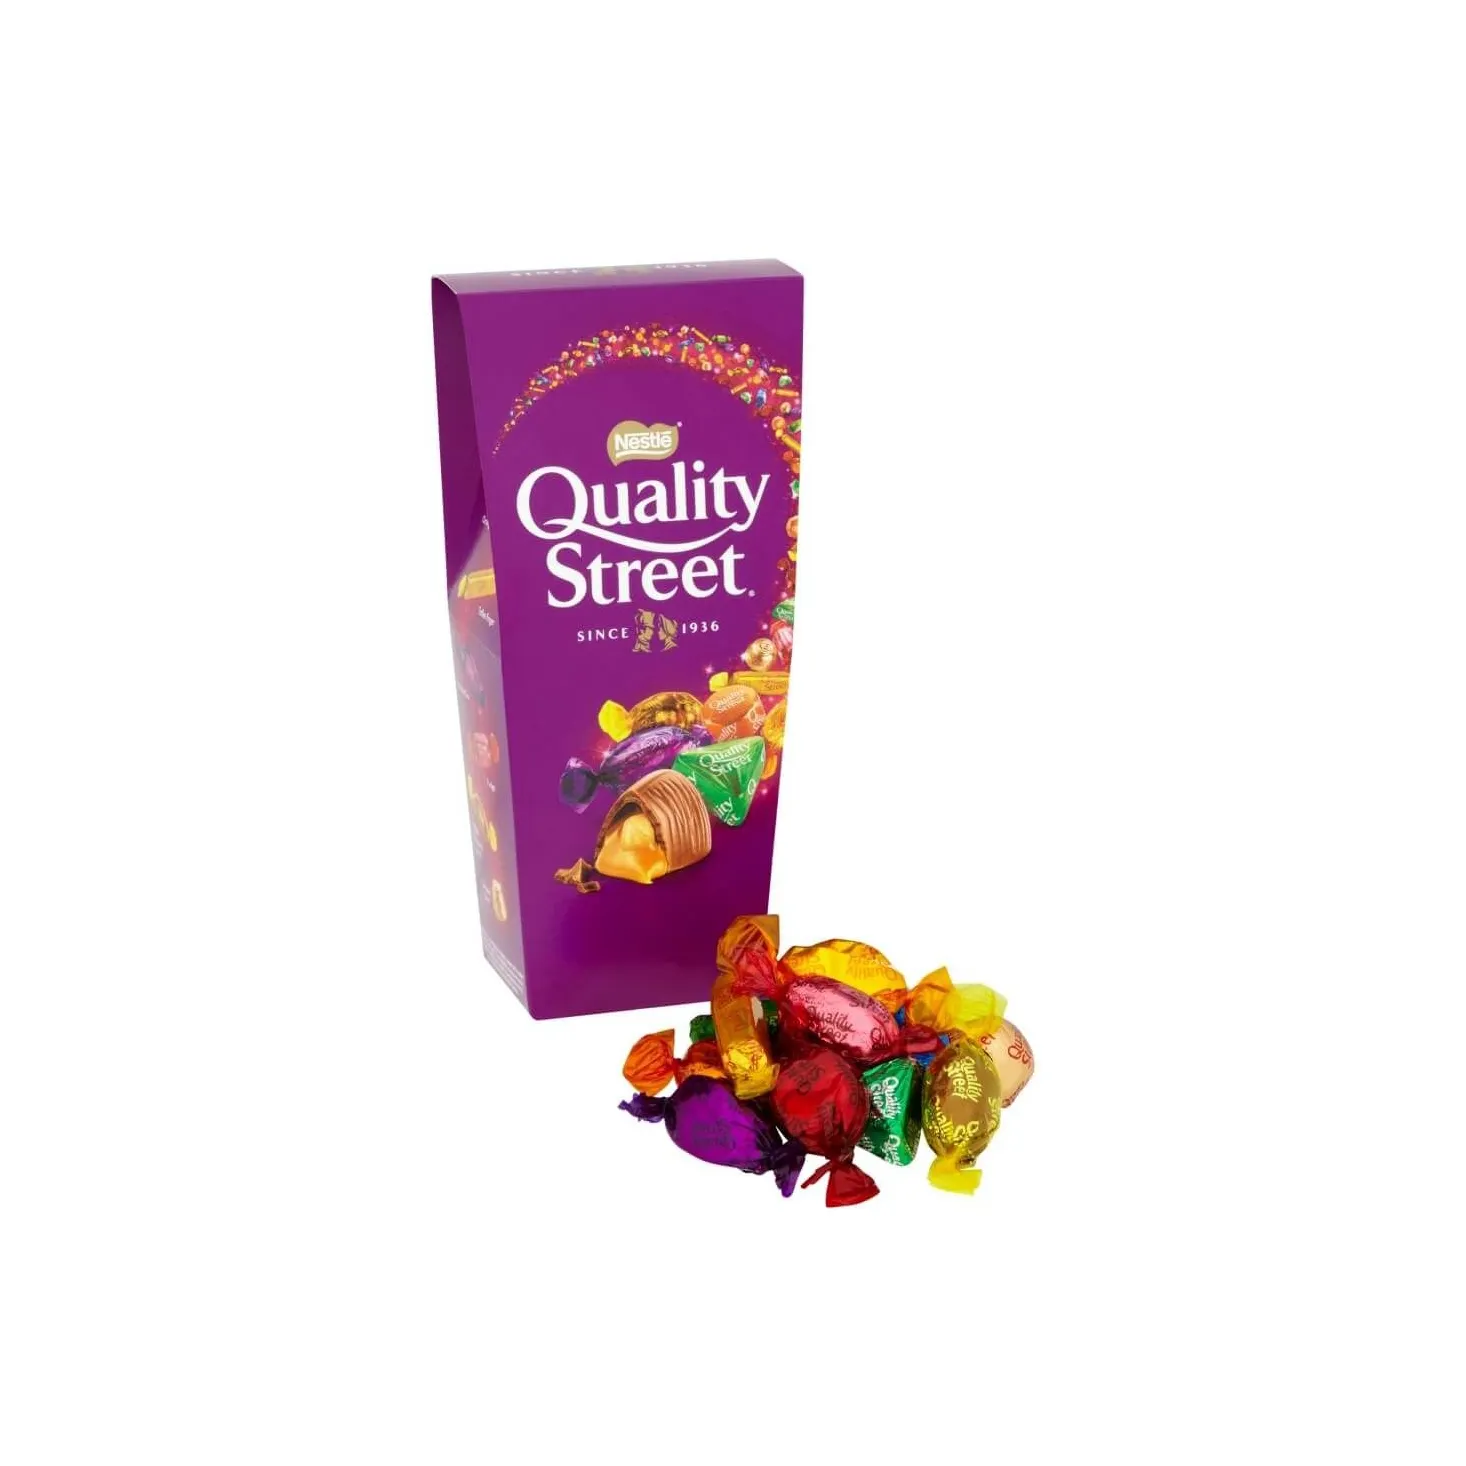 Nestle Quality Street Tin Box 900g